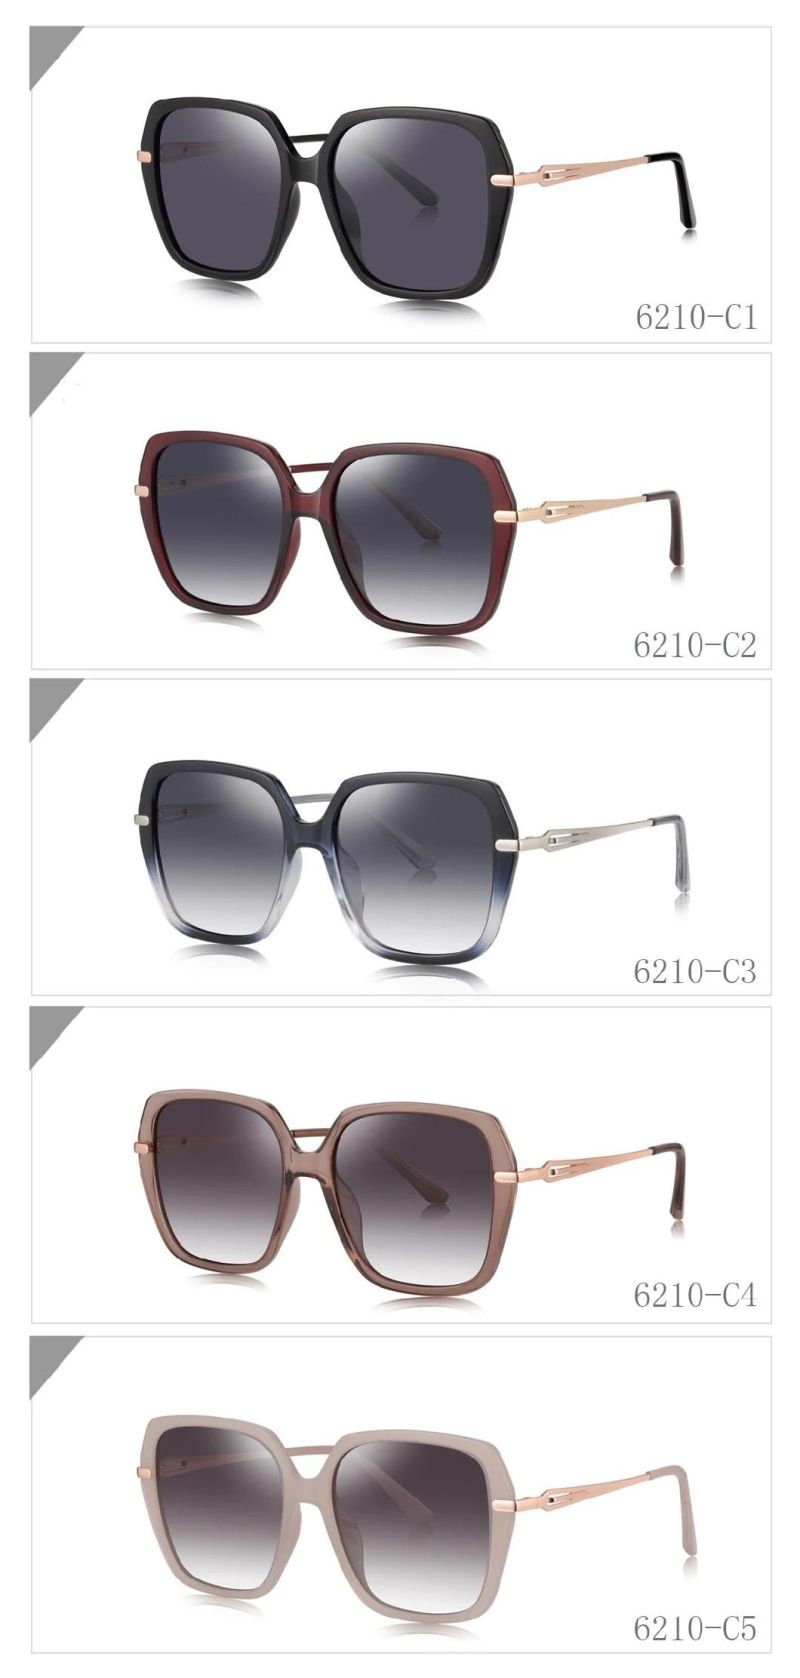 2020 Fashion New Good Design Sunglasses for Ready Goods